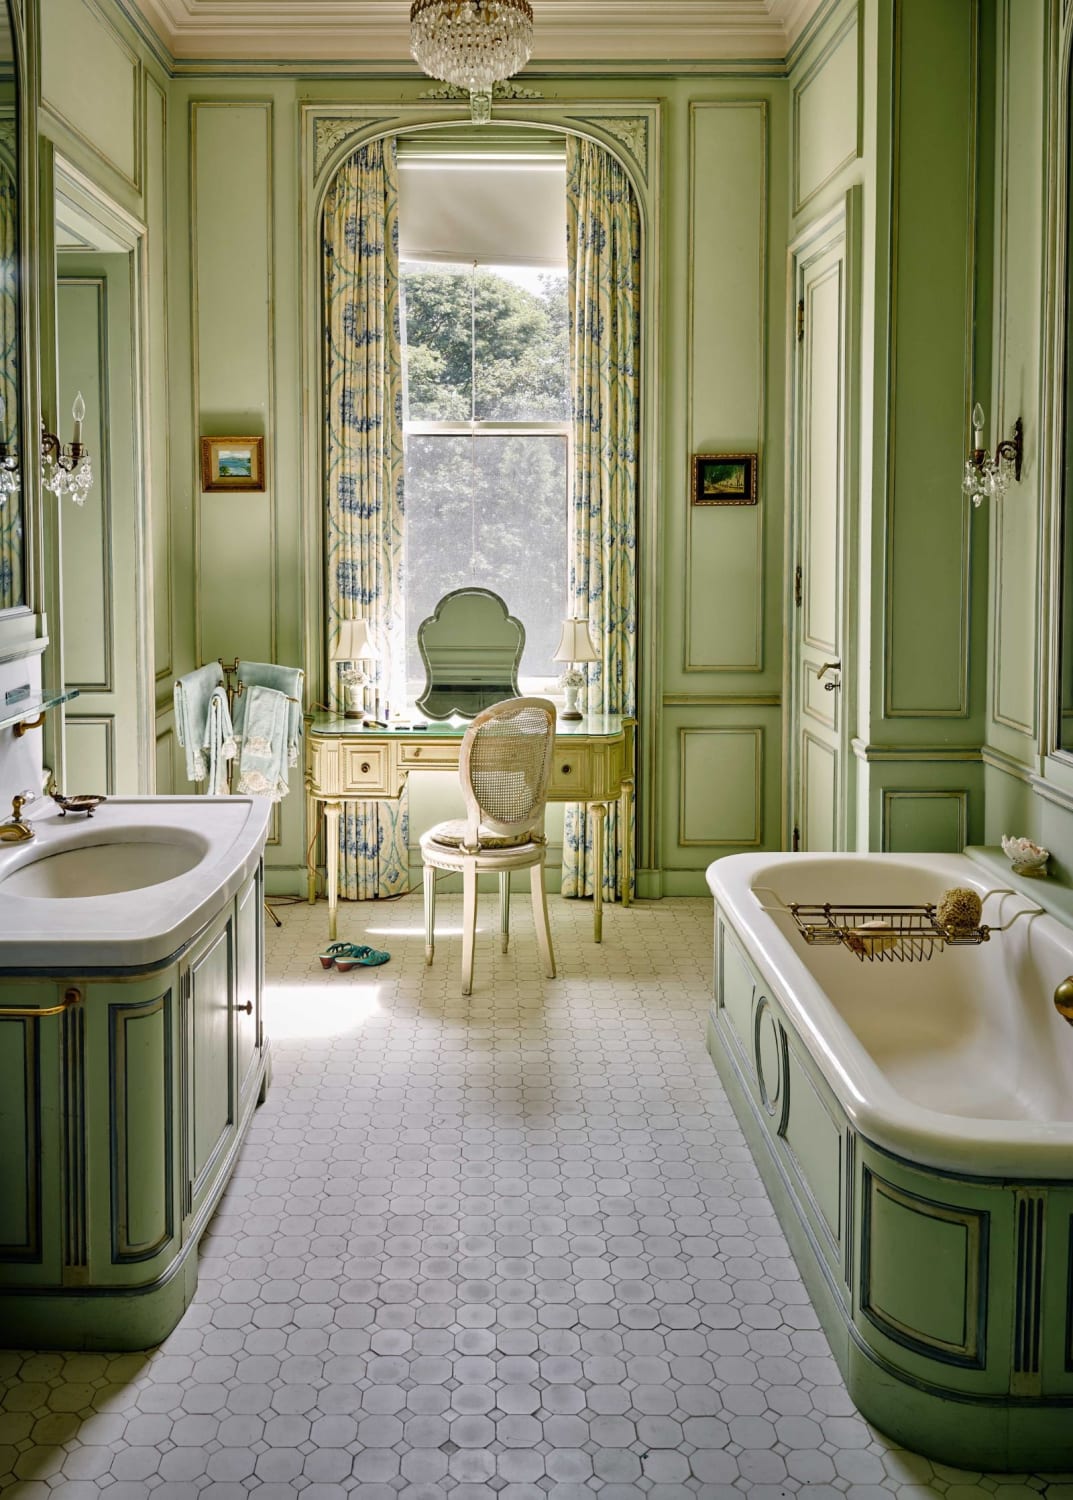 A bathroom at Beaulieu House mansion in Newport, RI